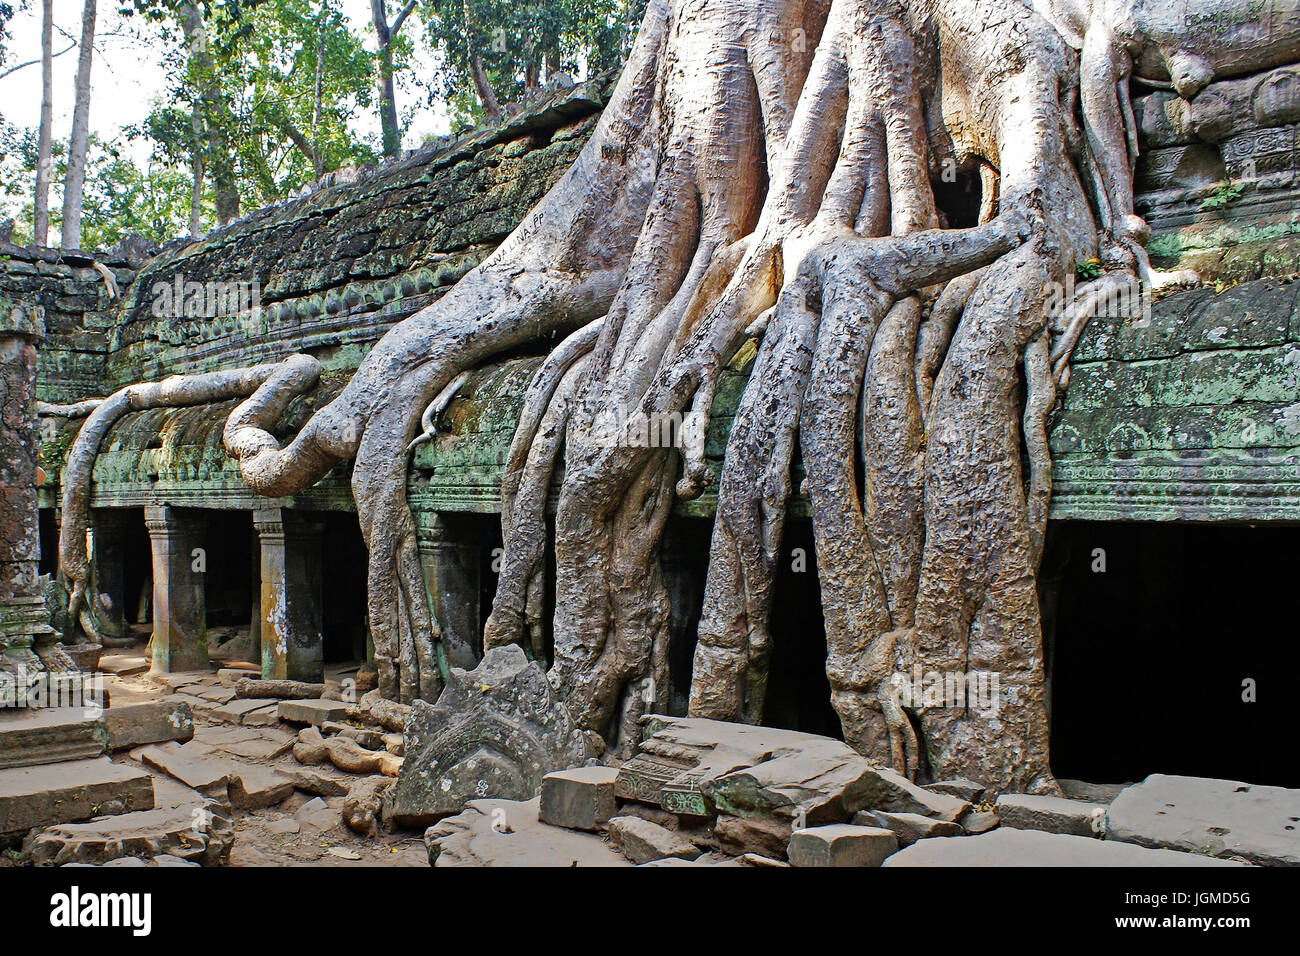 Baum Wurzeln Uberwuchern alte Tempel Anordnung in Kambodscha, Baumwurzeln Uberwuchern Alte Tempelanlage in Kambodscha Stockfoto